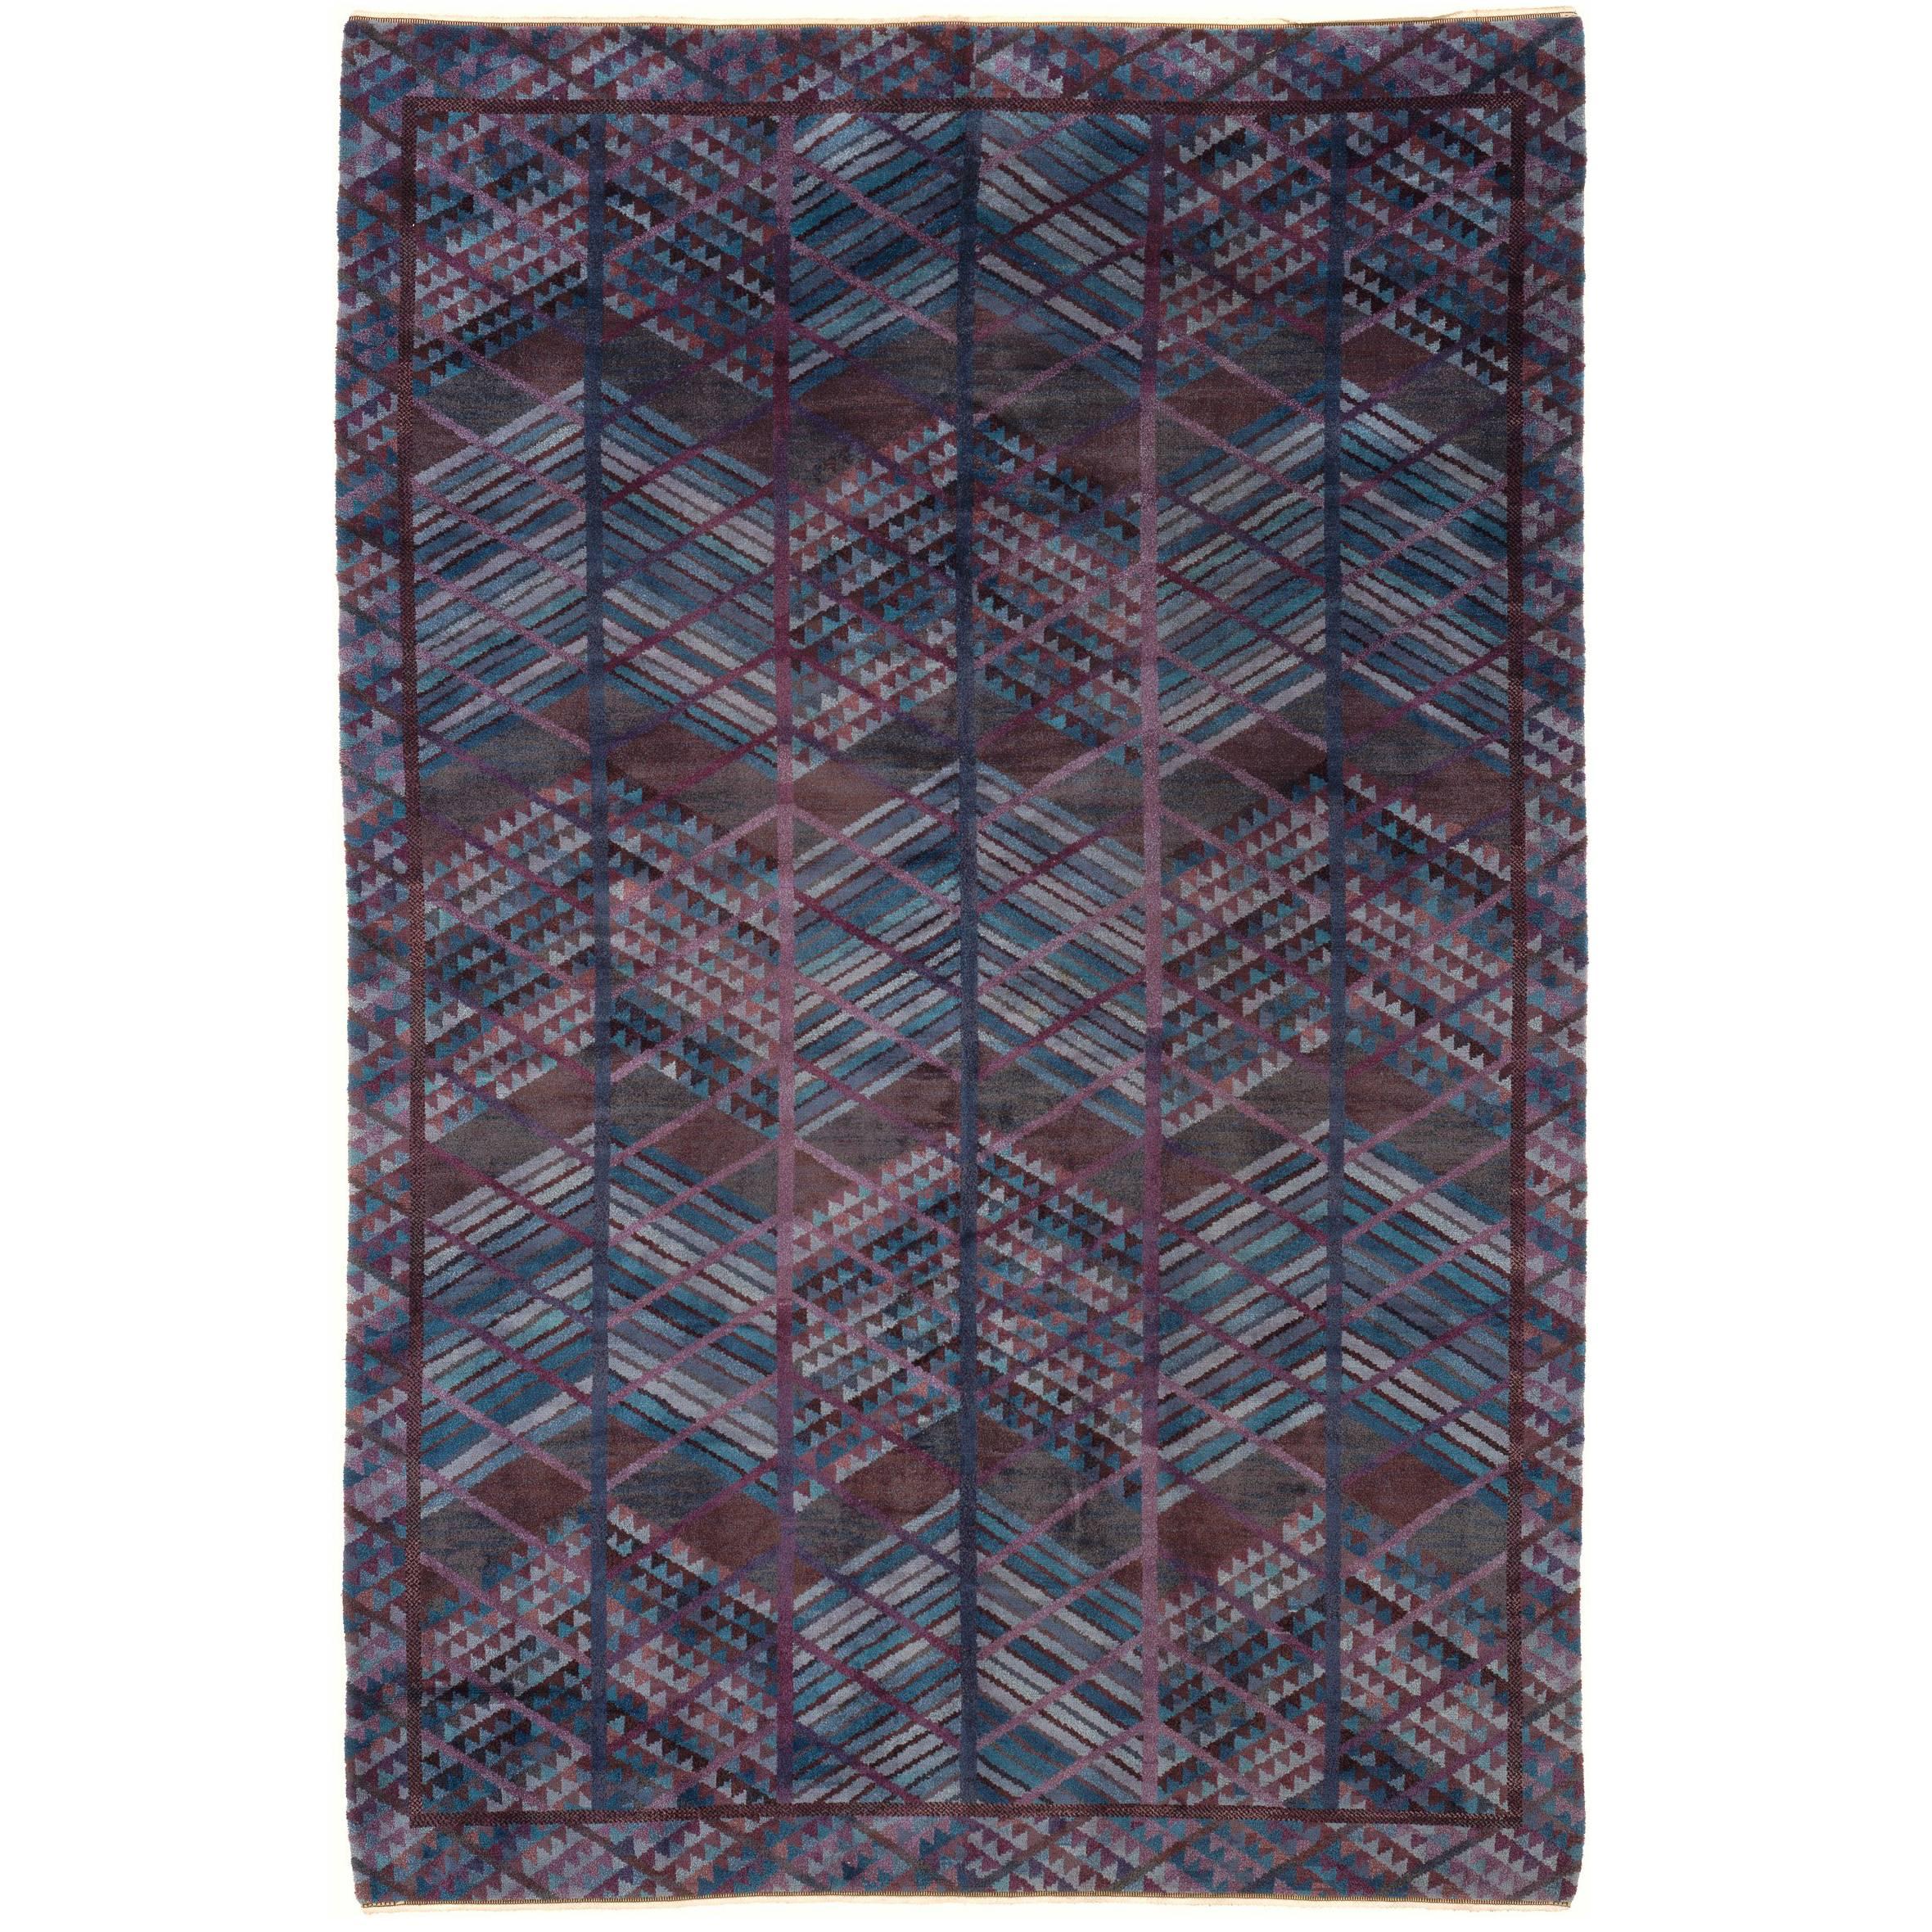 Swedish Carpet by Marianne Richter, "Blue Forest"